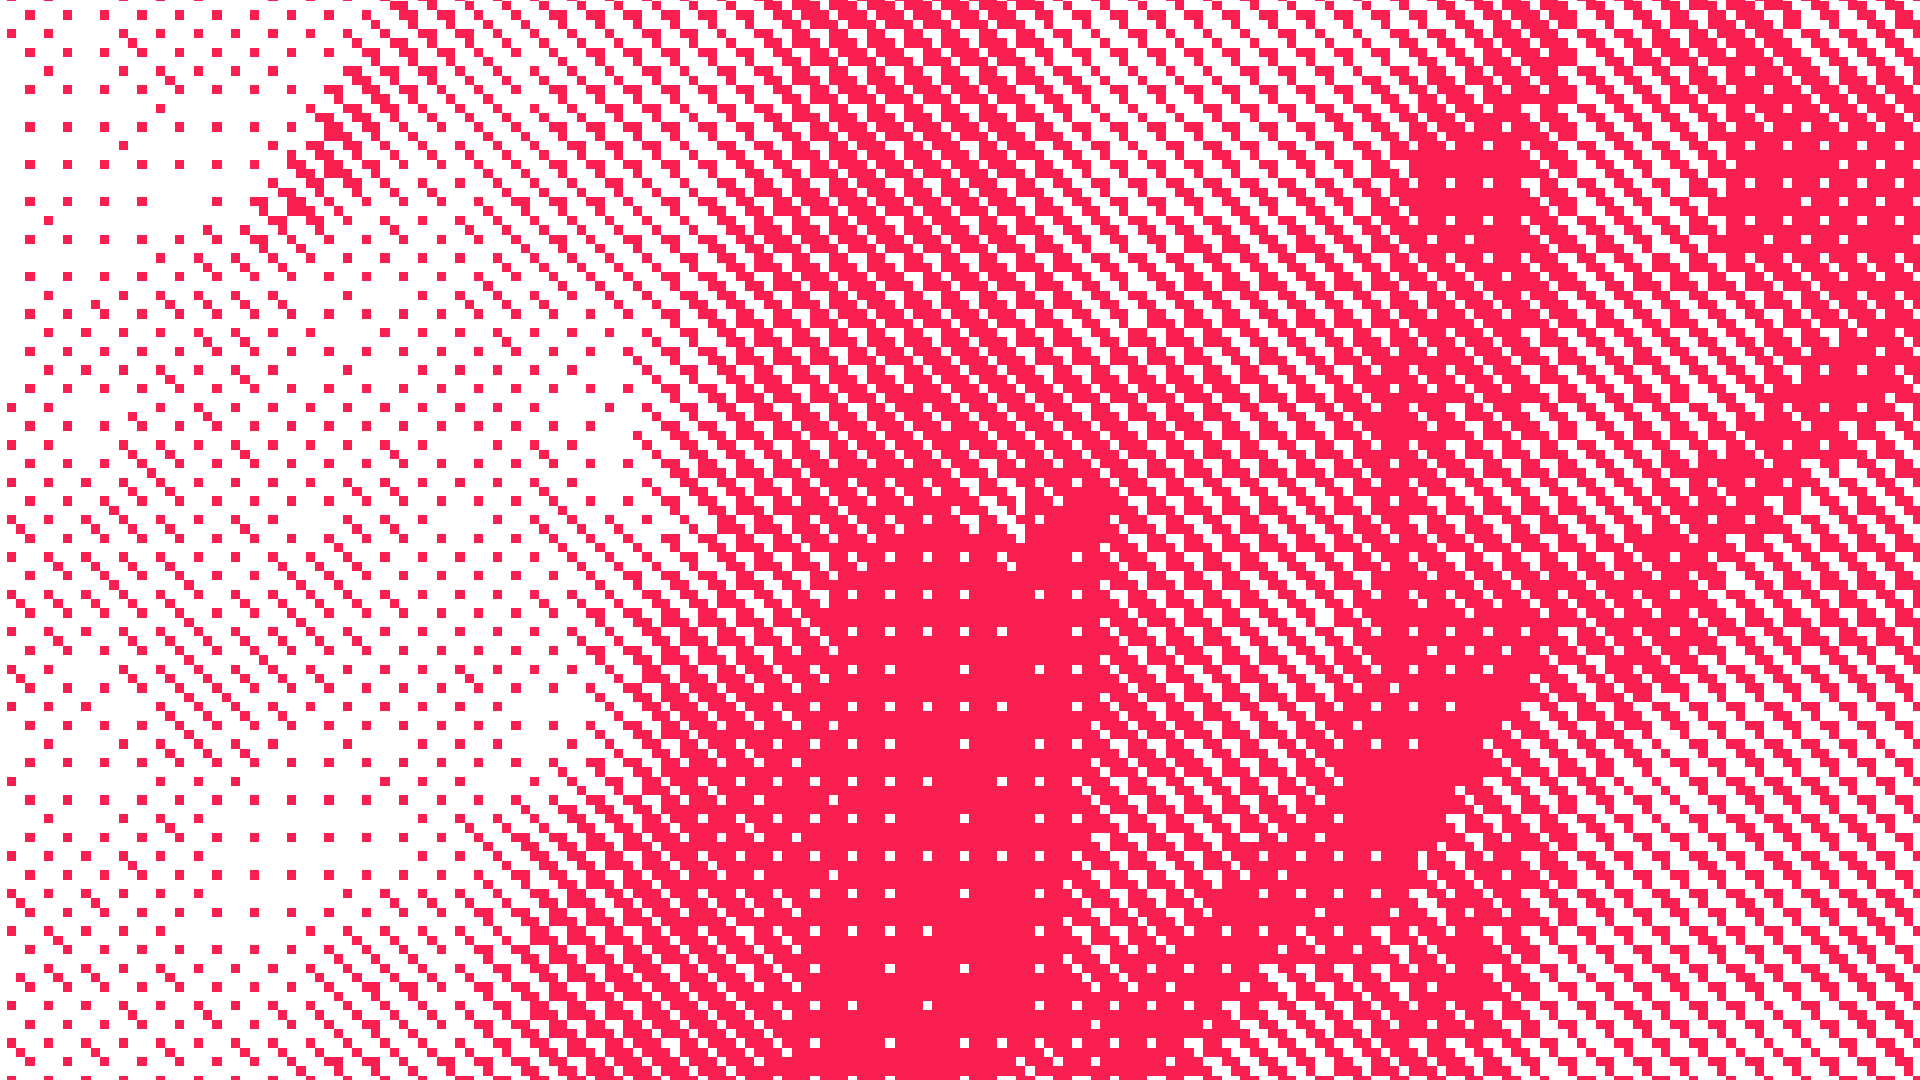 Pattern-01-Red